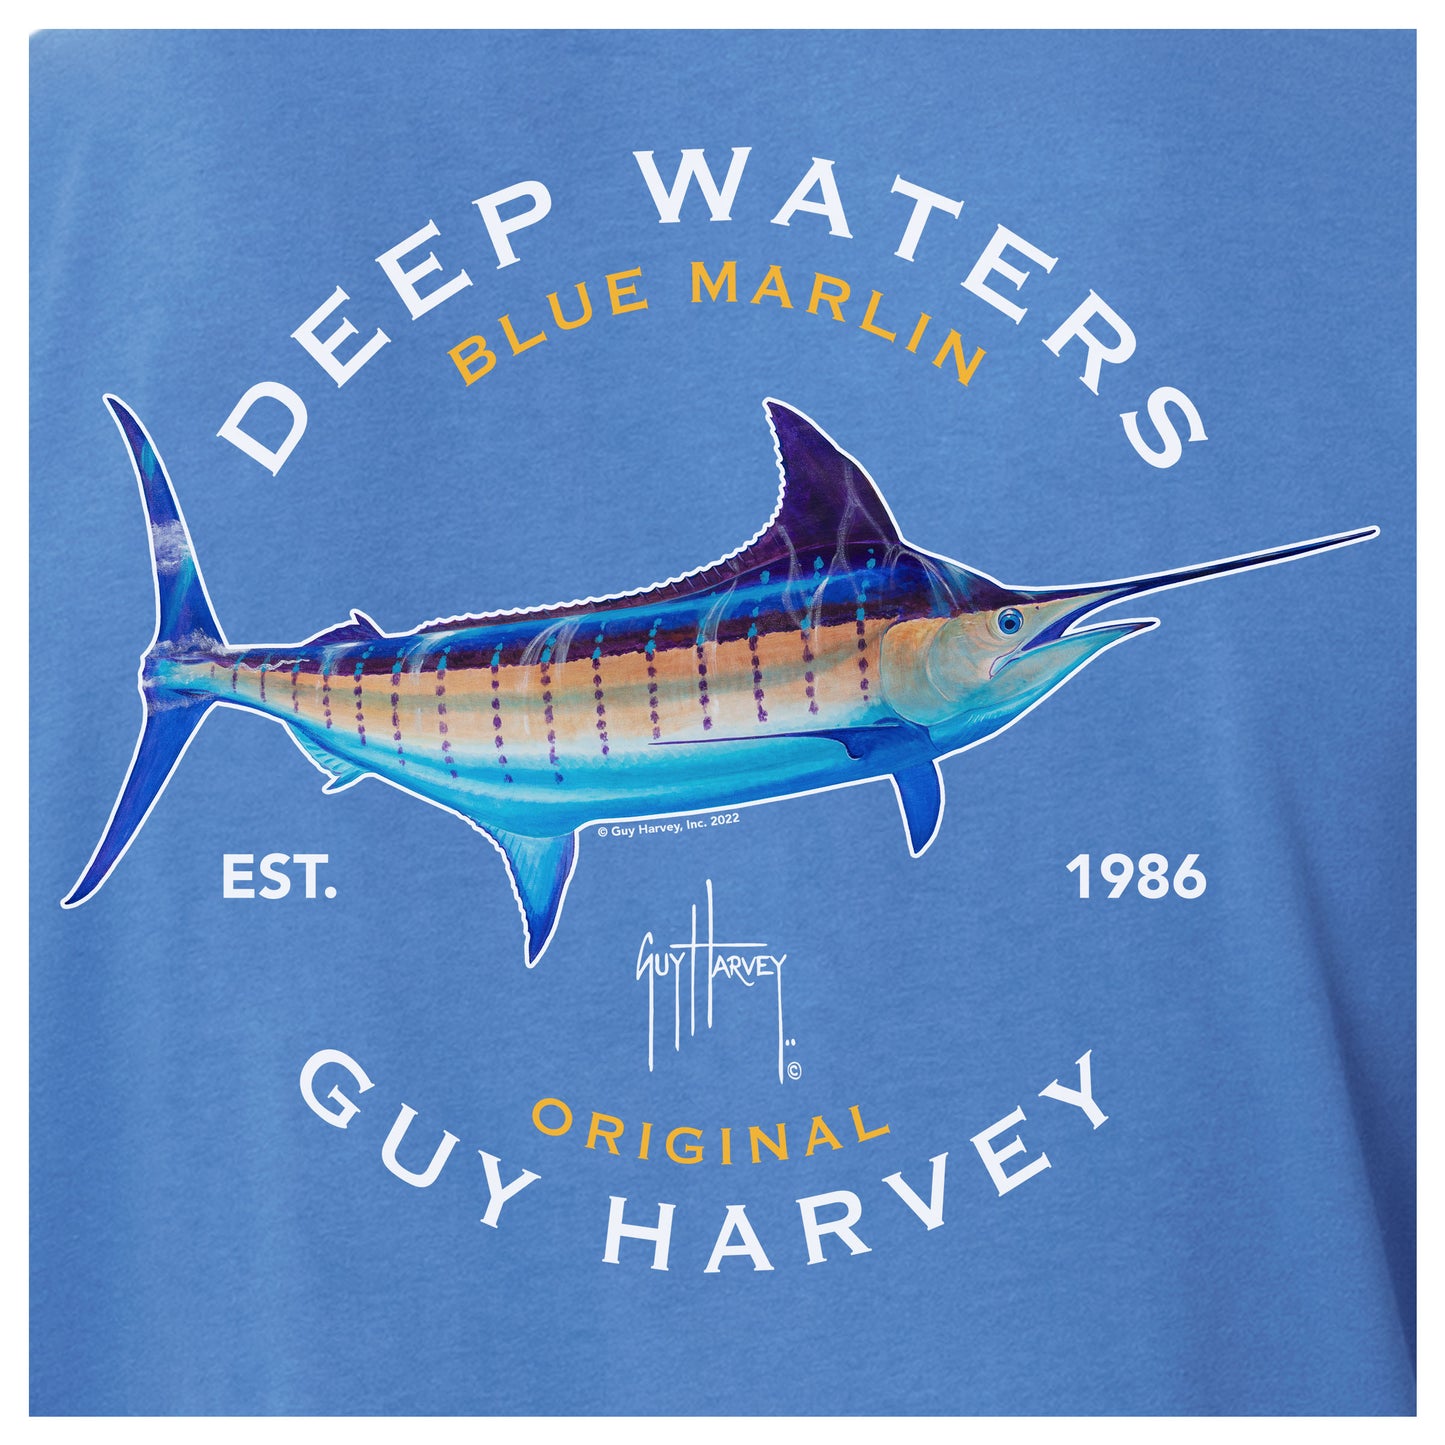 t-shirt medium Guy Harvey deep sea fishing boat ocean 19.5 inches pit to  pit